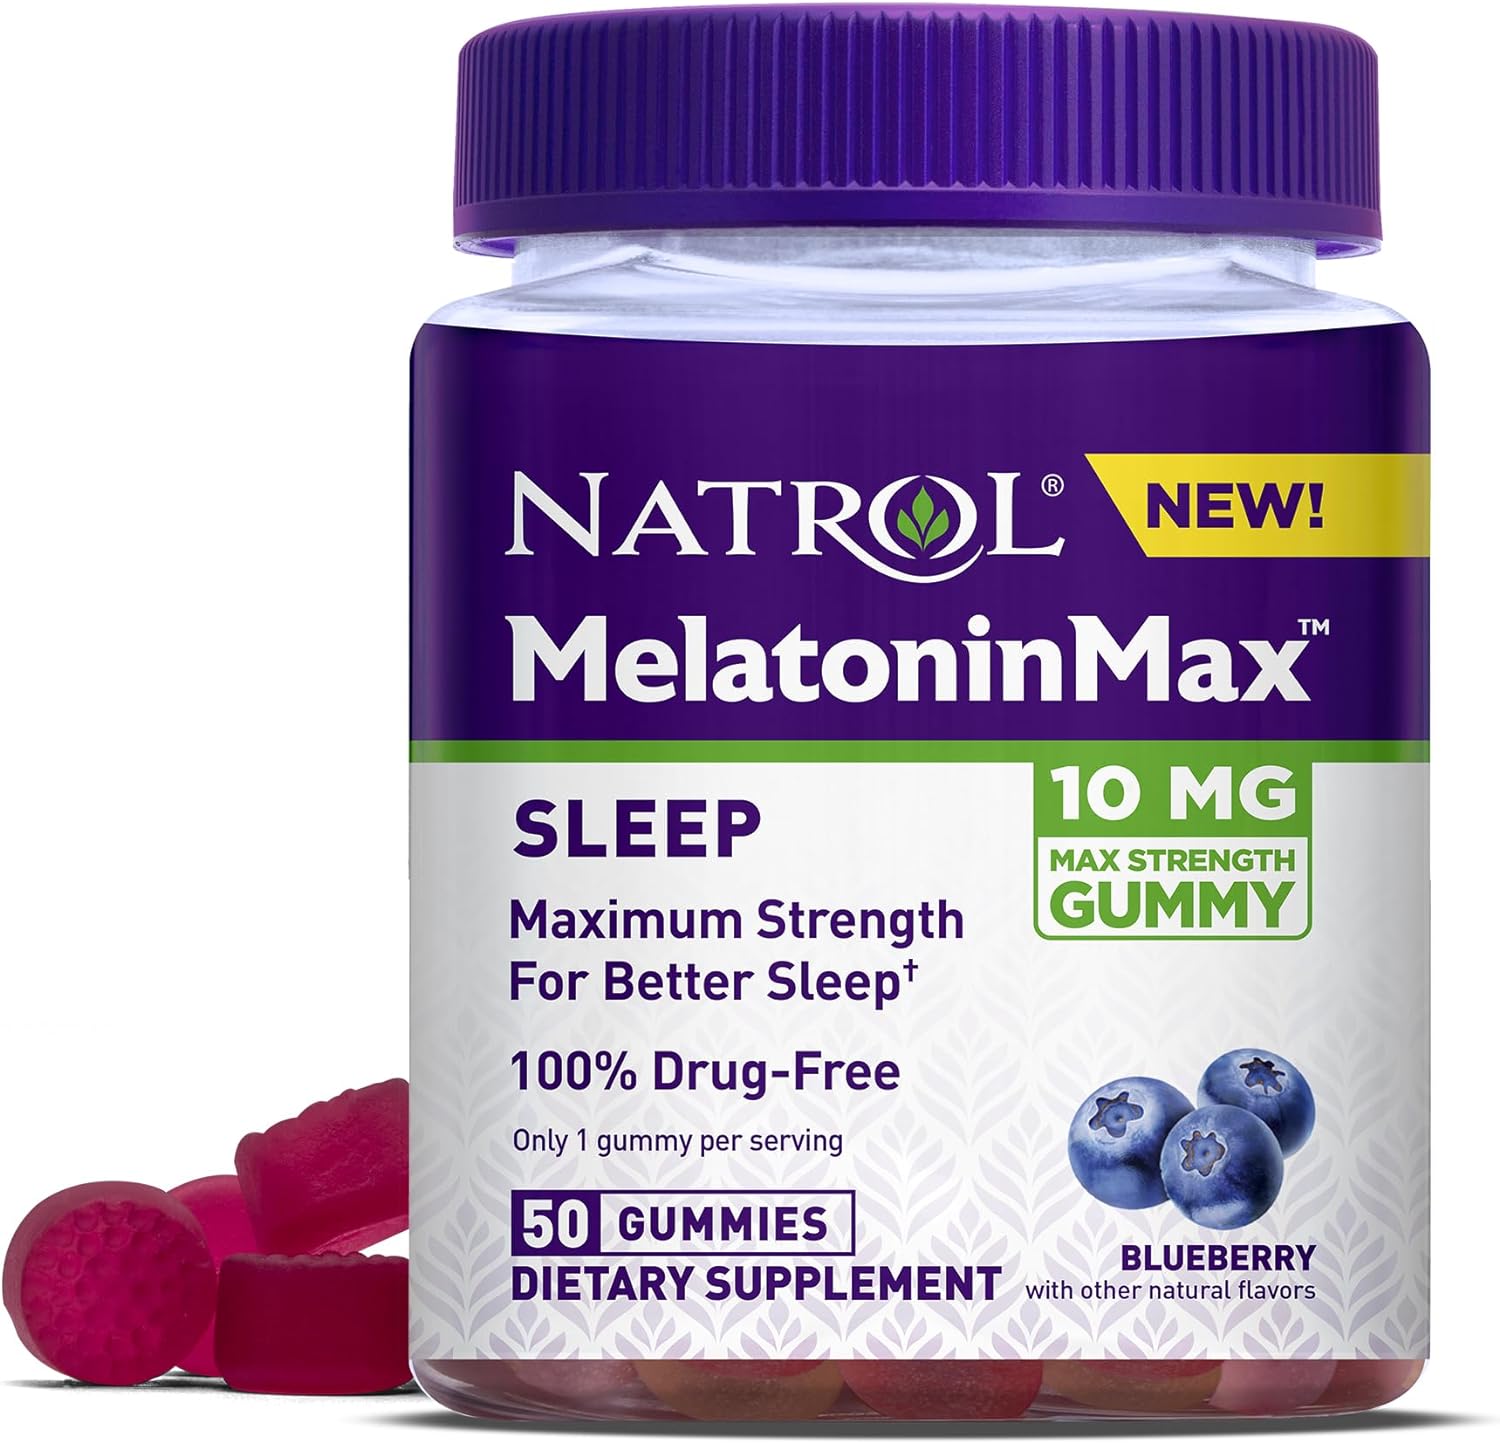 Natrol MelatoninMax Sleep Aid Gummy, 10mg per Gummy, Maximum Strength